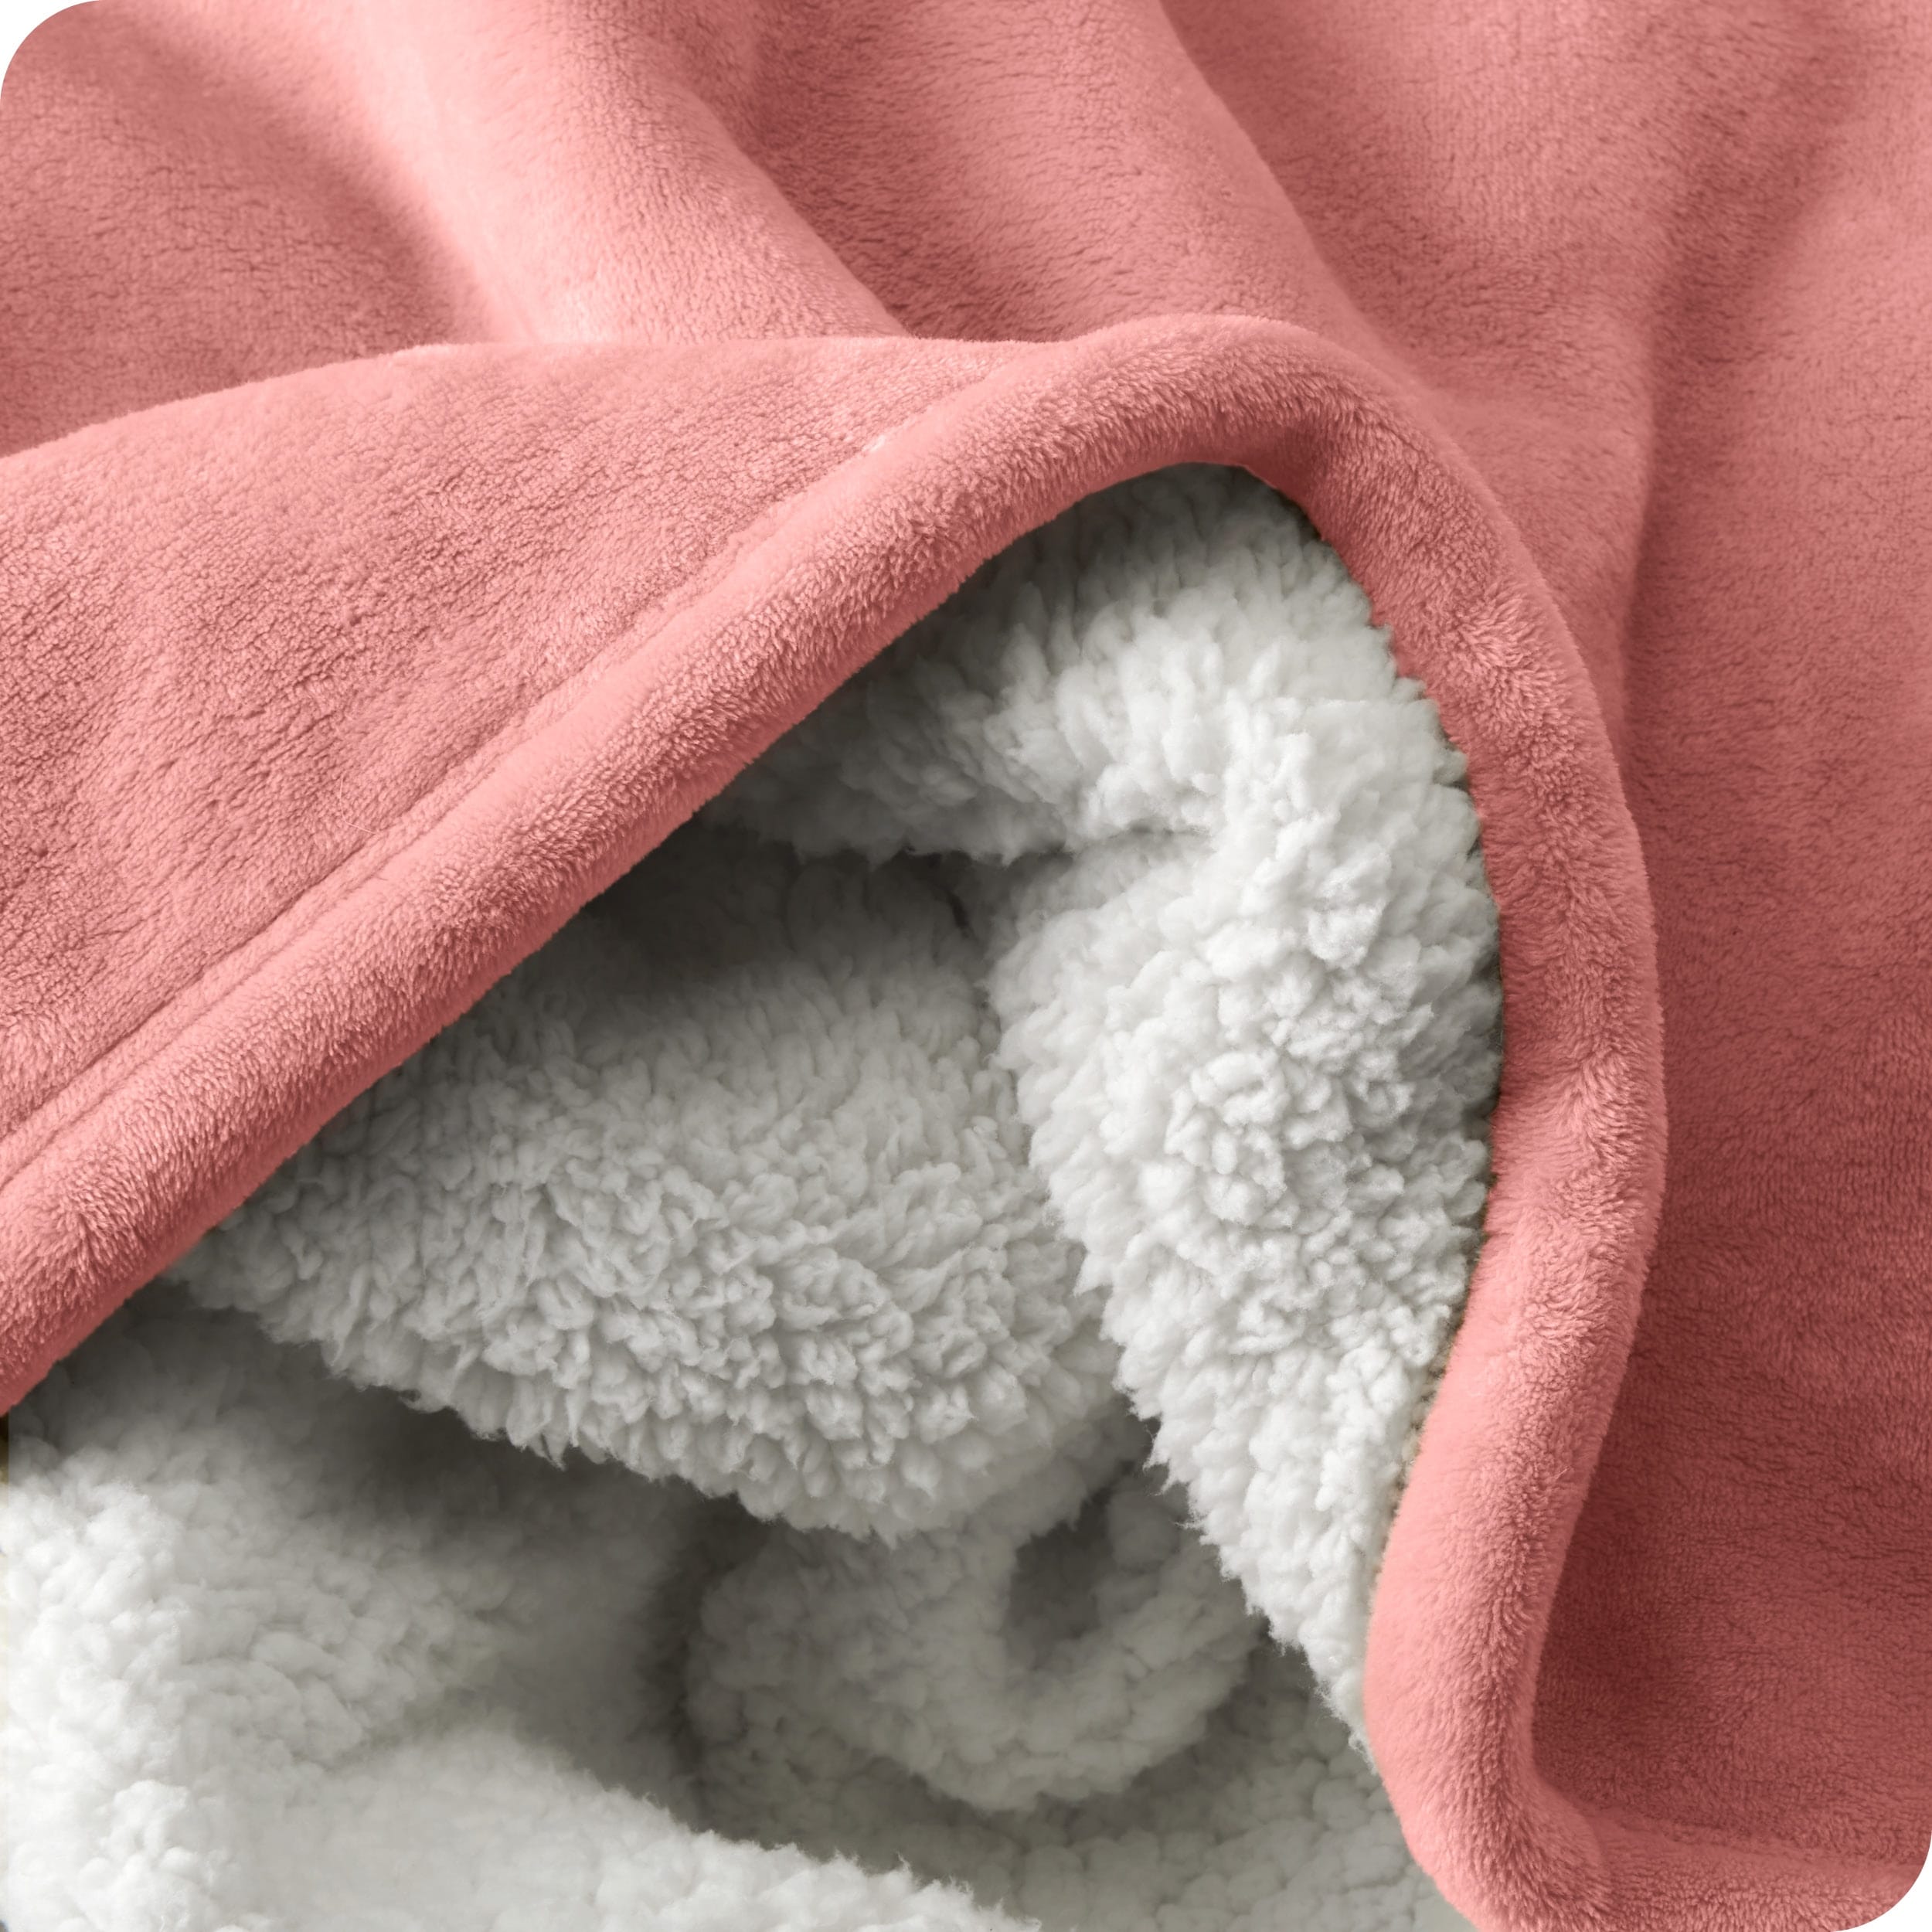 Bare Home Sherpa Fleece Blanket - Reversible Plush Bed Blanket - Bed Bath &  Beyond - 28530310